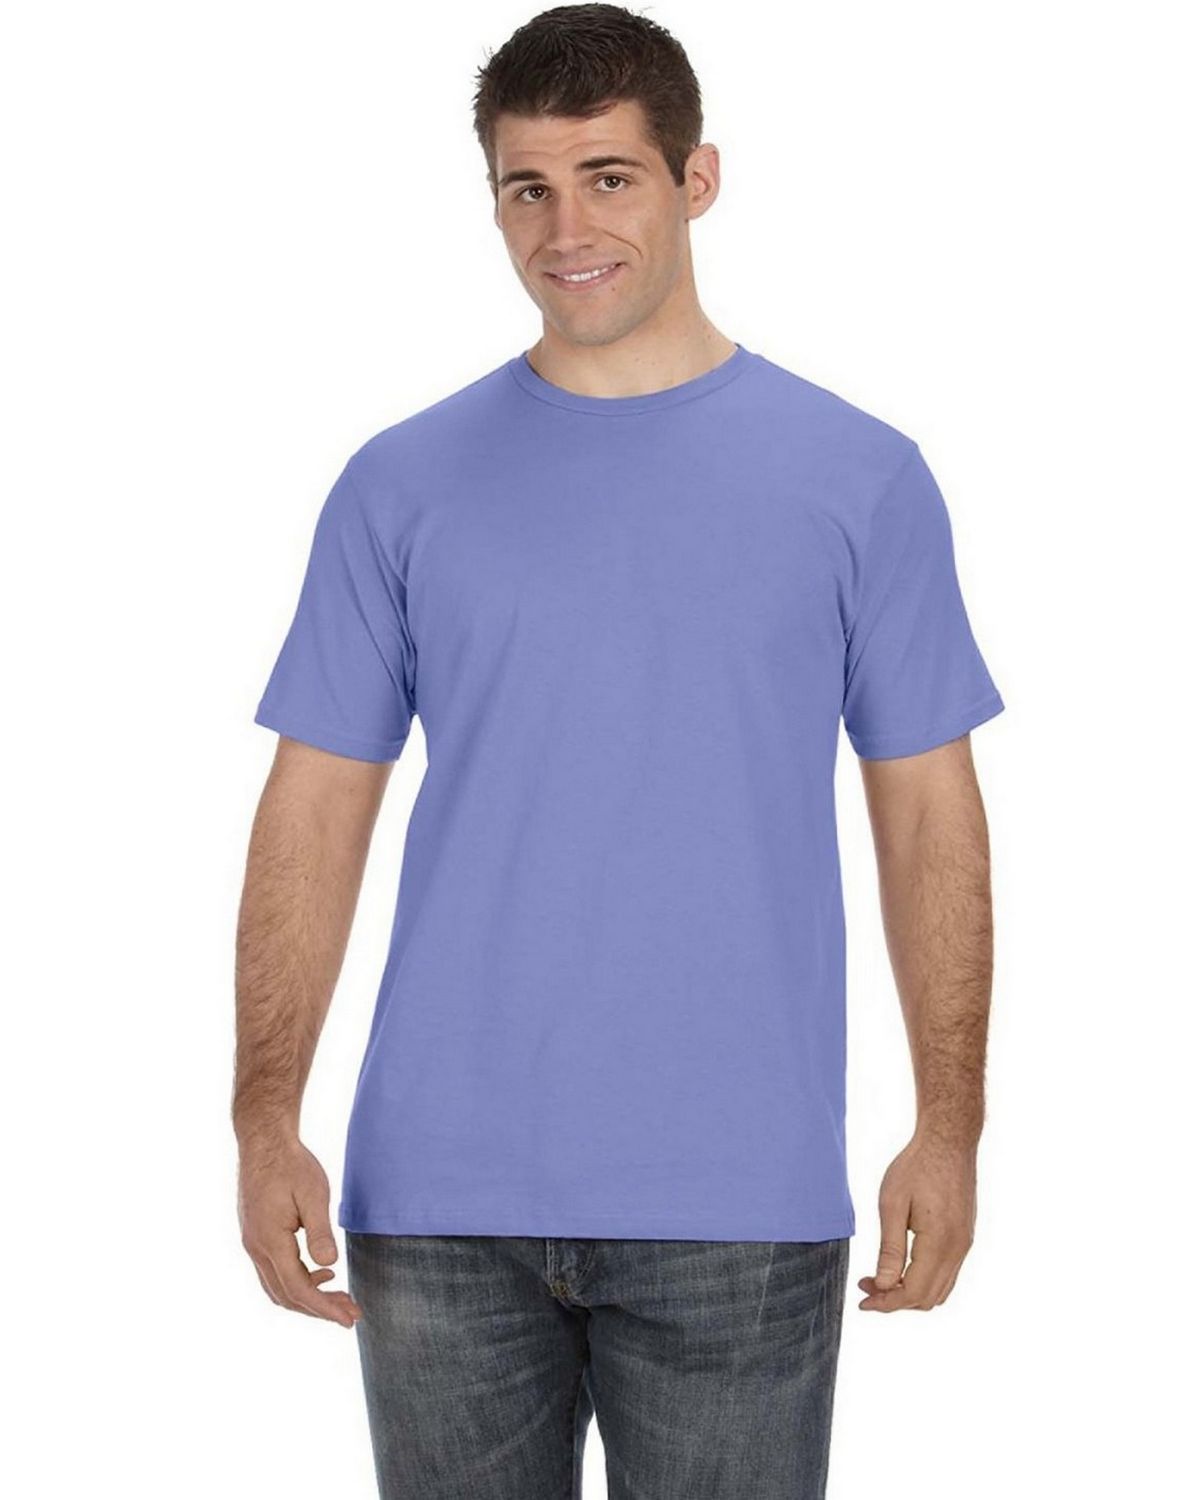 Anvil OR420 100% Organic Men's Cotton T-Shirt